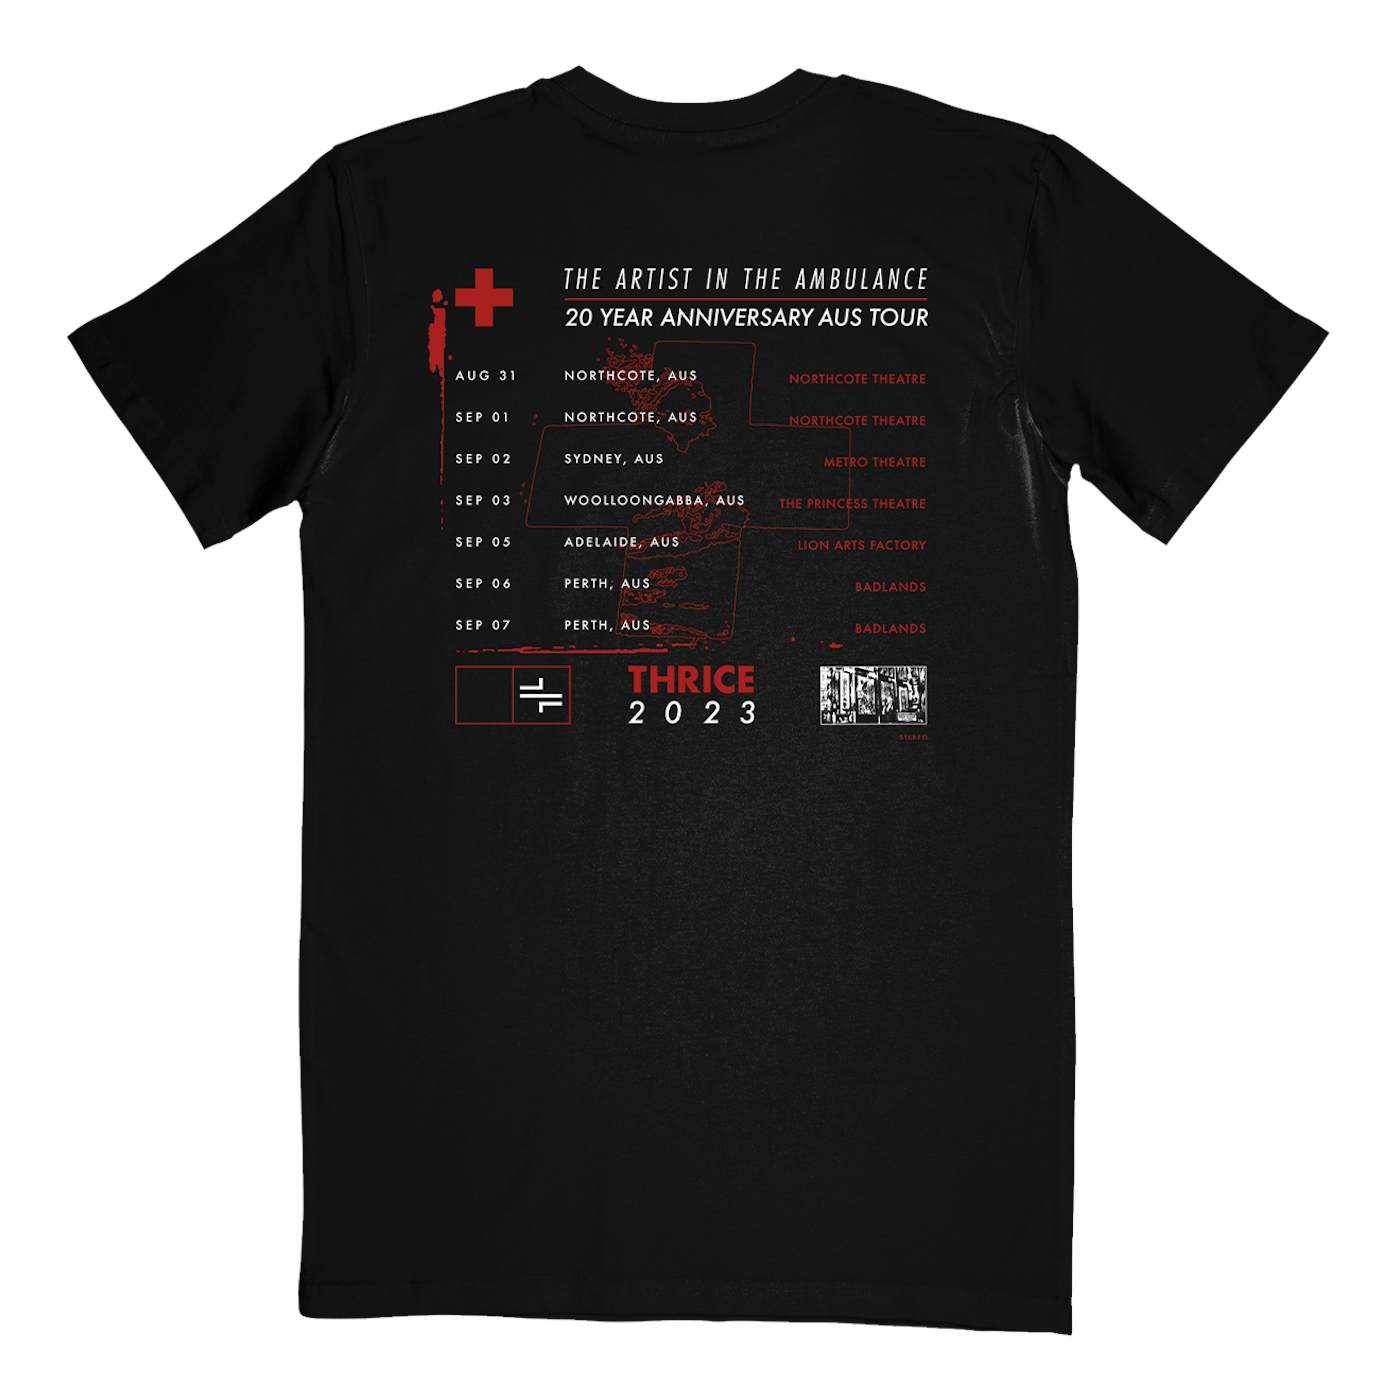 Thrice "Artist In The Ambulance Tour" T-Shirt